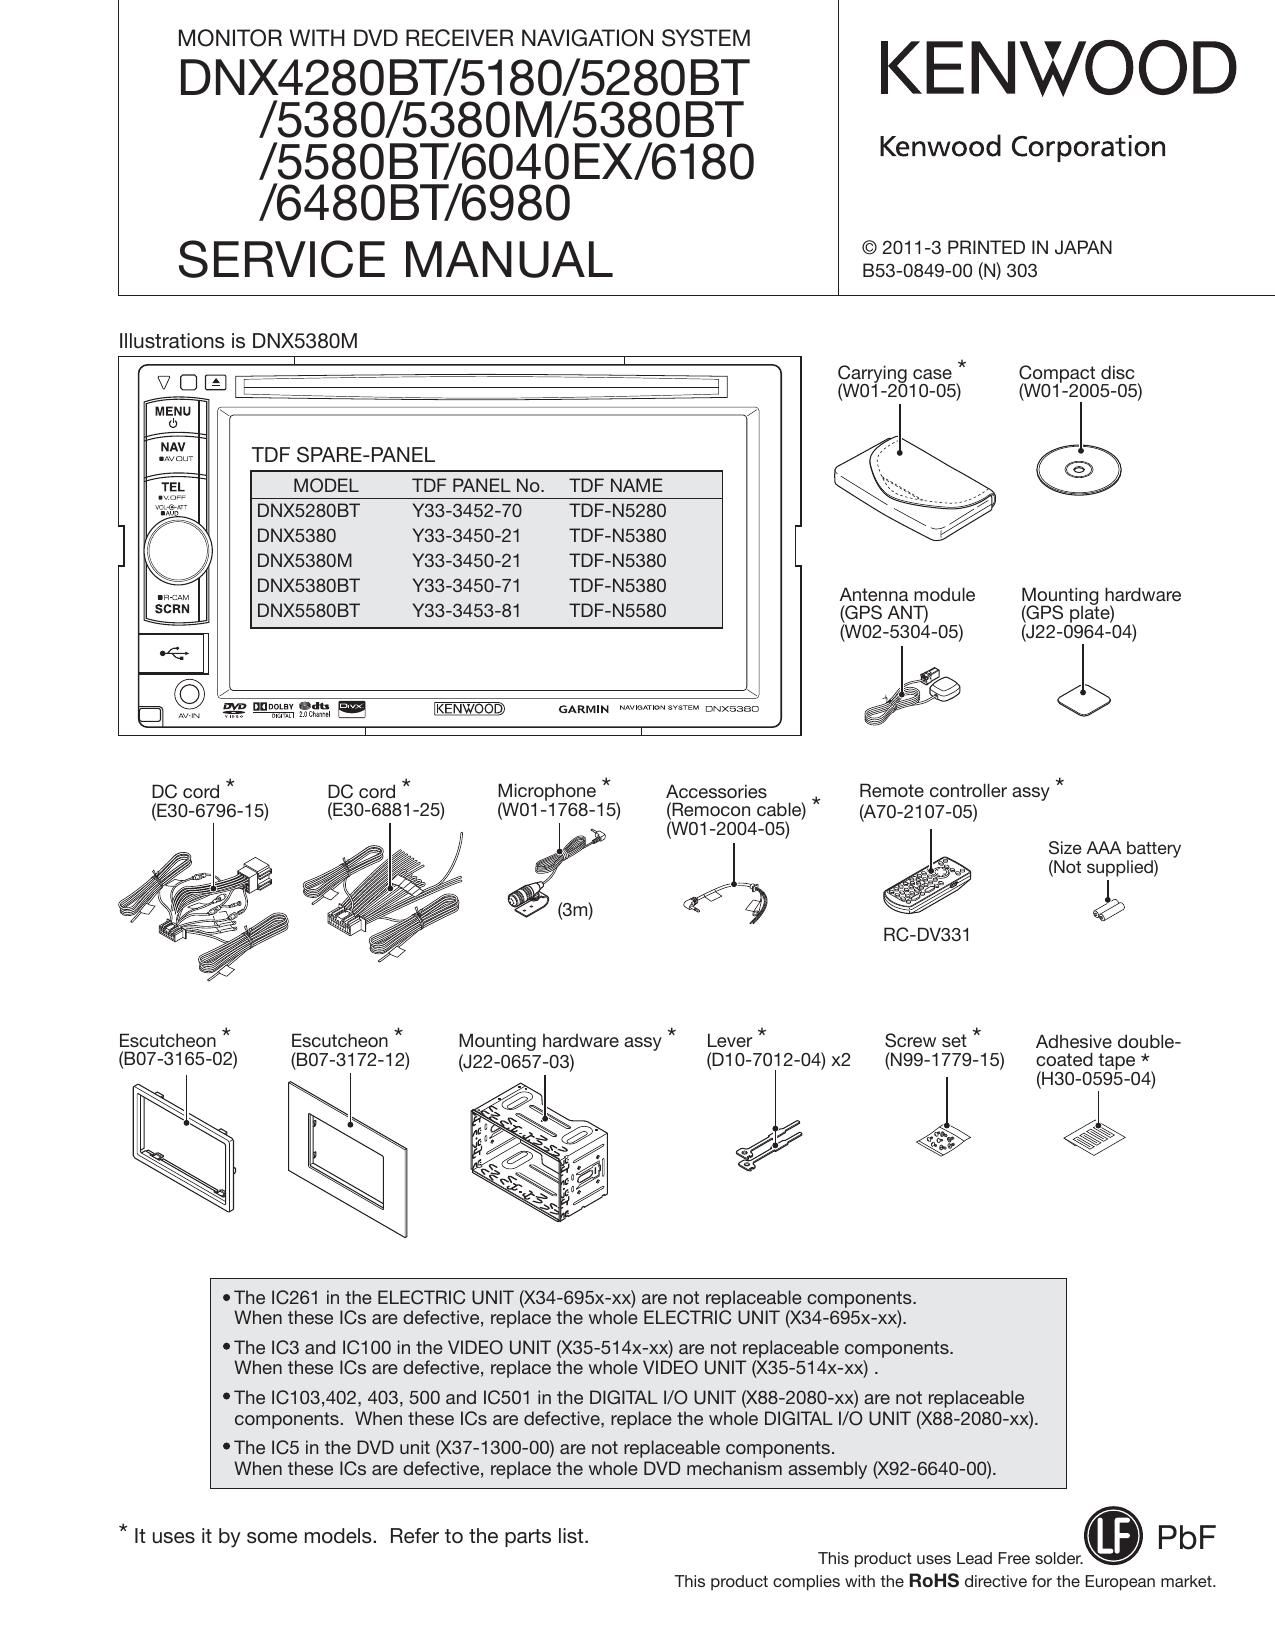 Kenwood DNX 5380 Service Manual